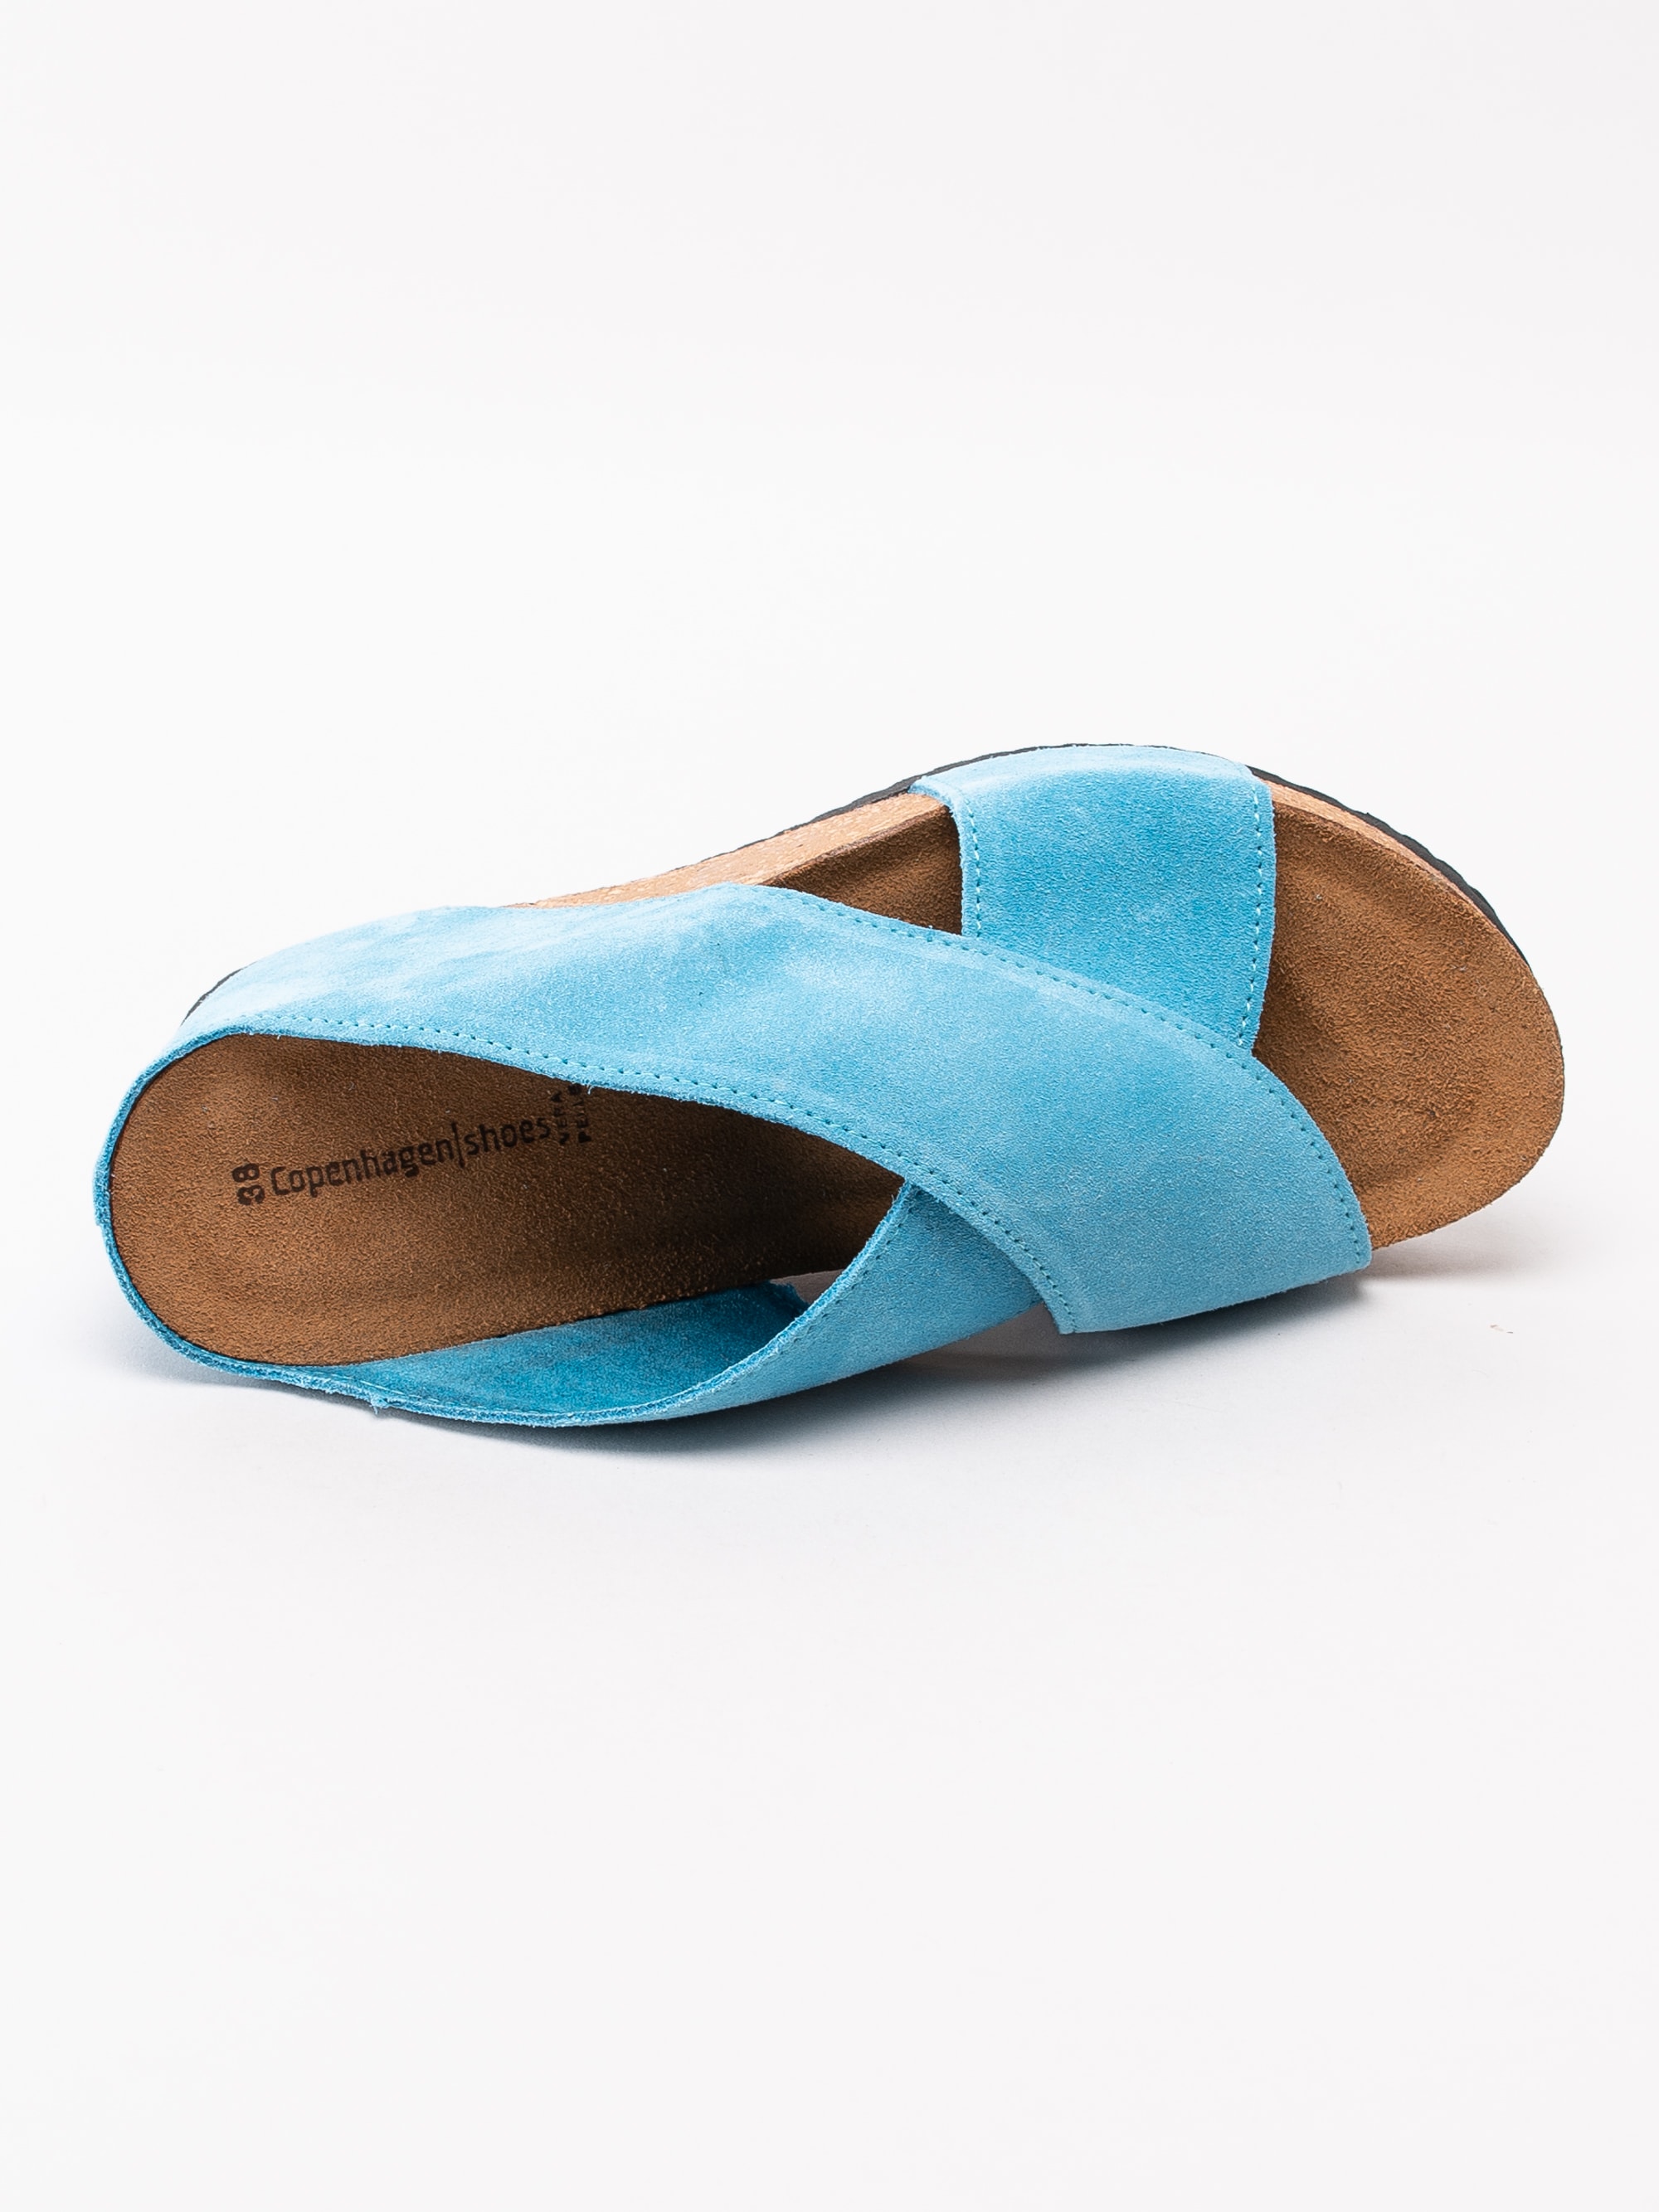 06191162 Copenhagen Shoes Frances Jeans Blue ljusblå slip in sandaler med korkkil-4